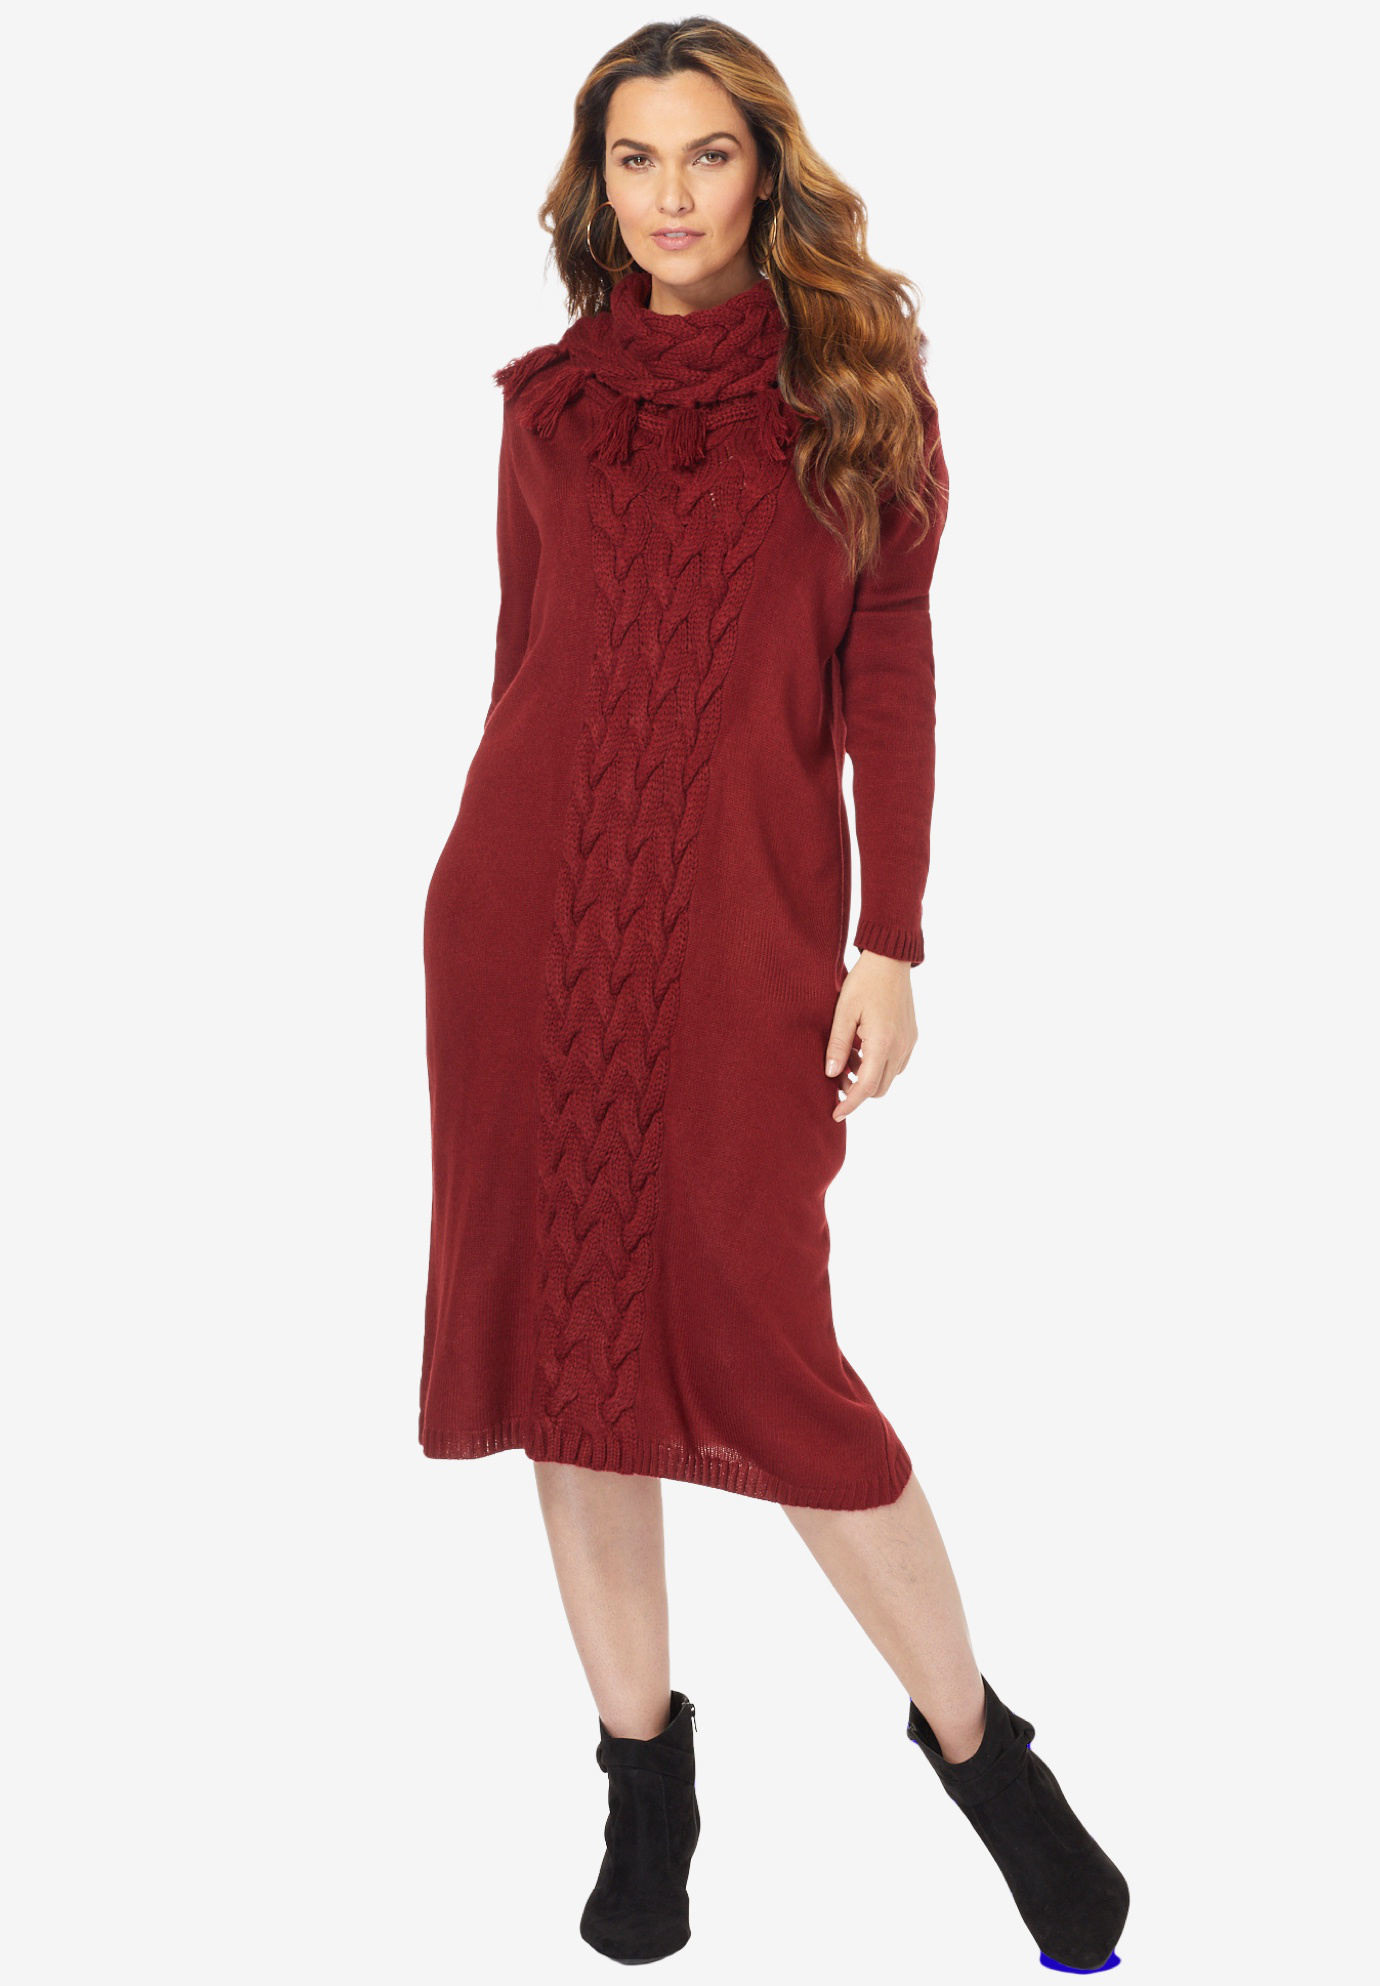 Fringed Cowl-Neck Sweater Dress, 